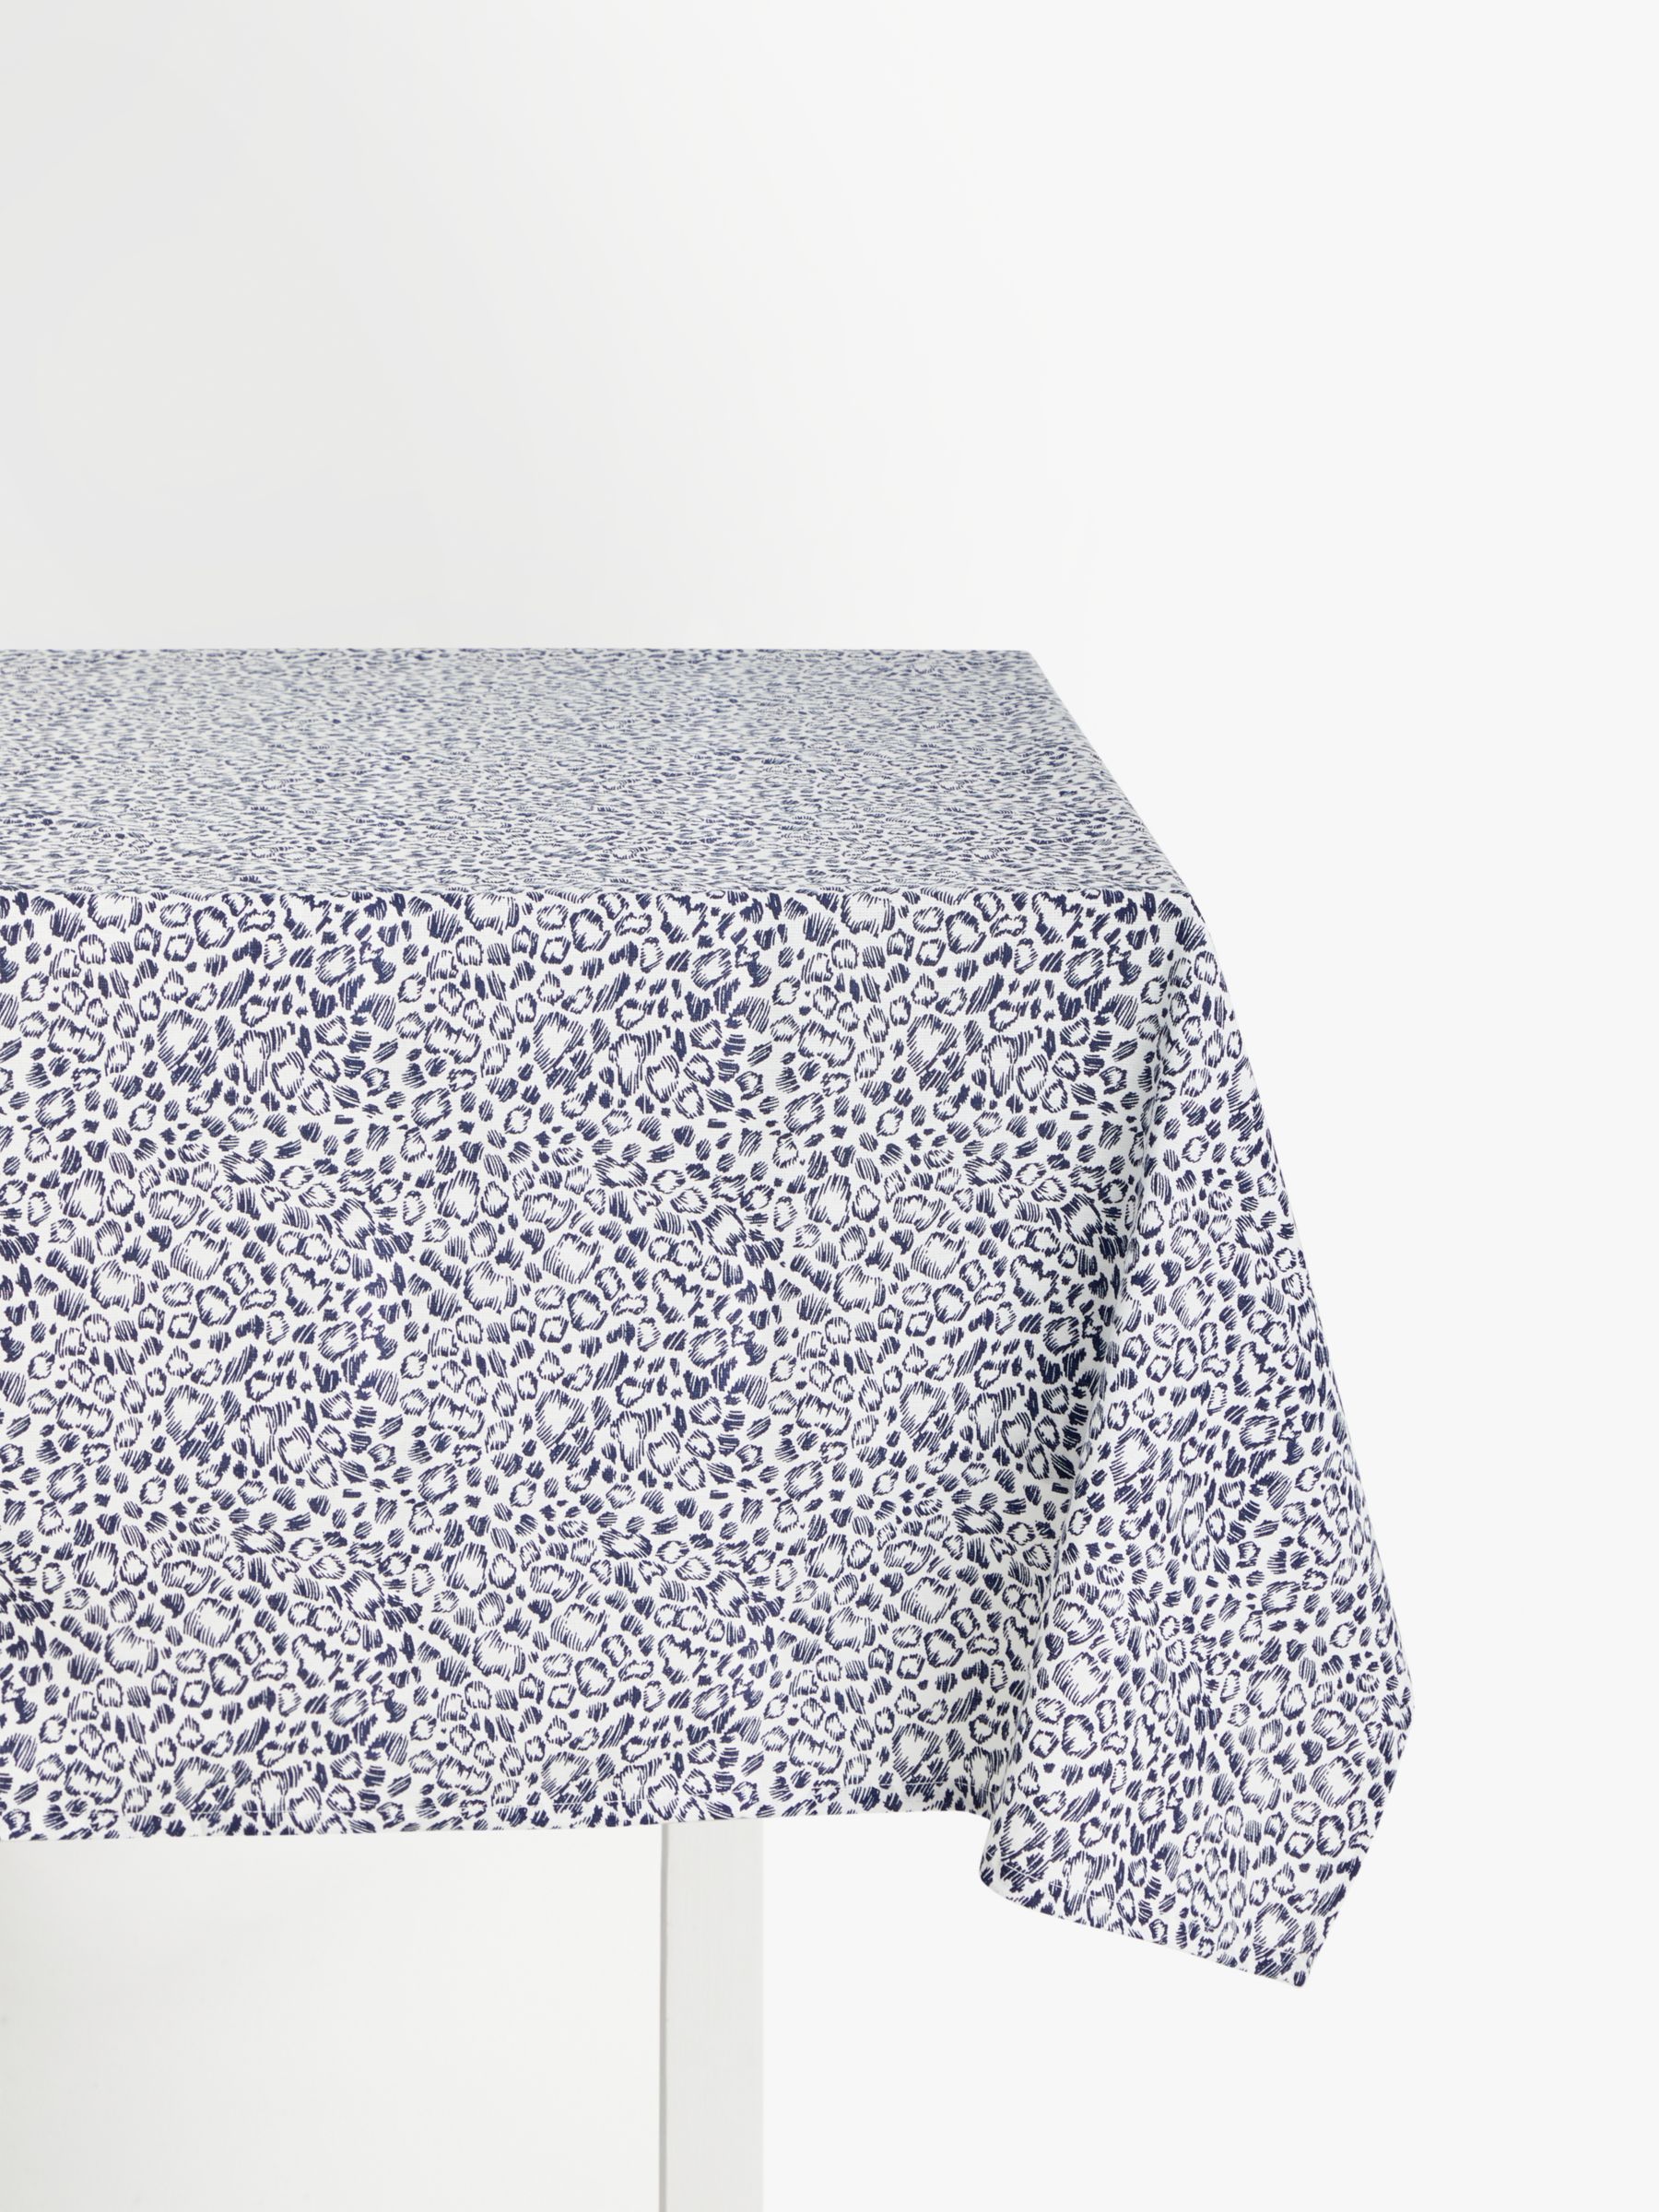 ANYDAY John Lewis & Partners Animal Print Rectangular Cotton Tablecloth, Black/White